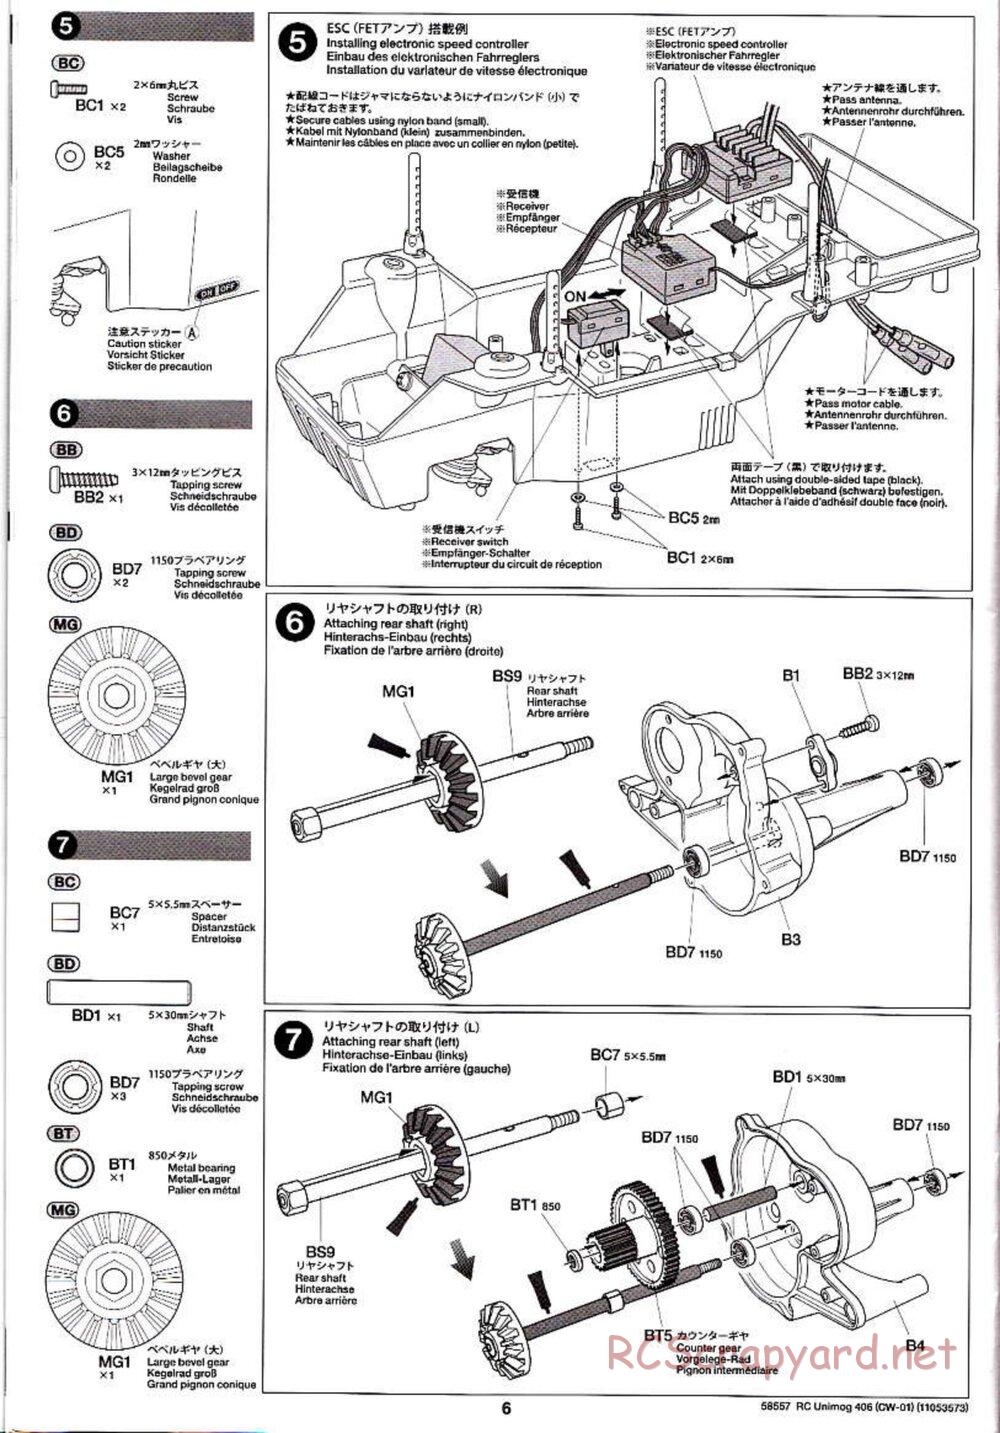 Tamiya - Mercedes-Benz Unimog 406 Series U900 - CW-01 Chassis - Manual - Page 6